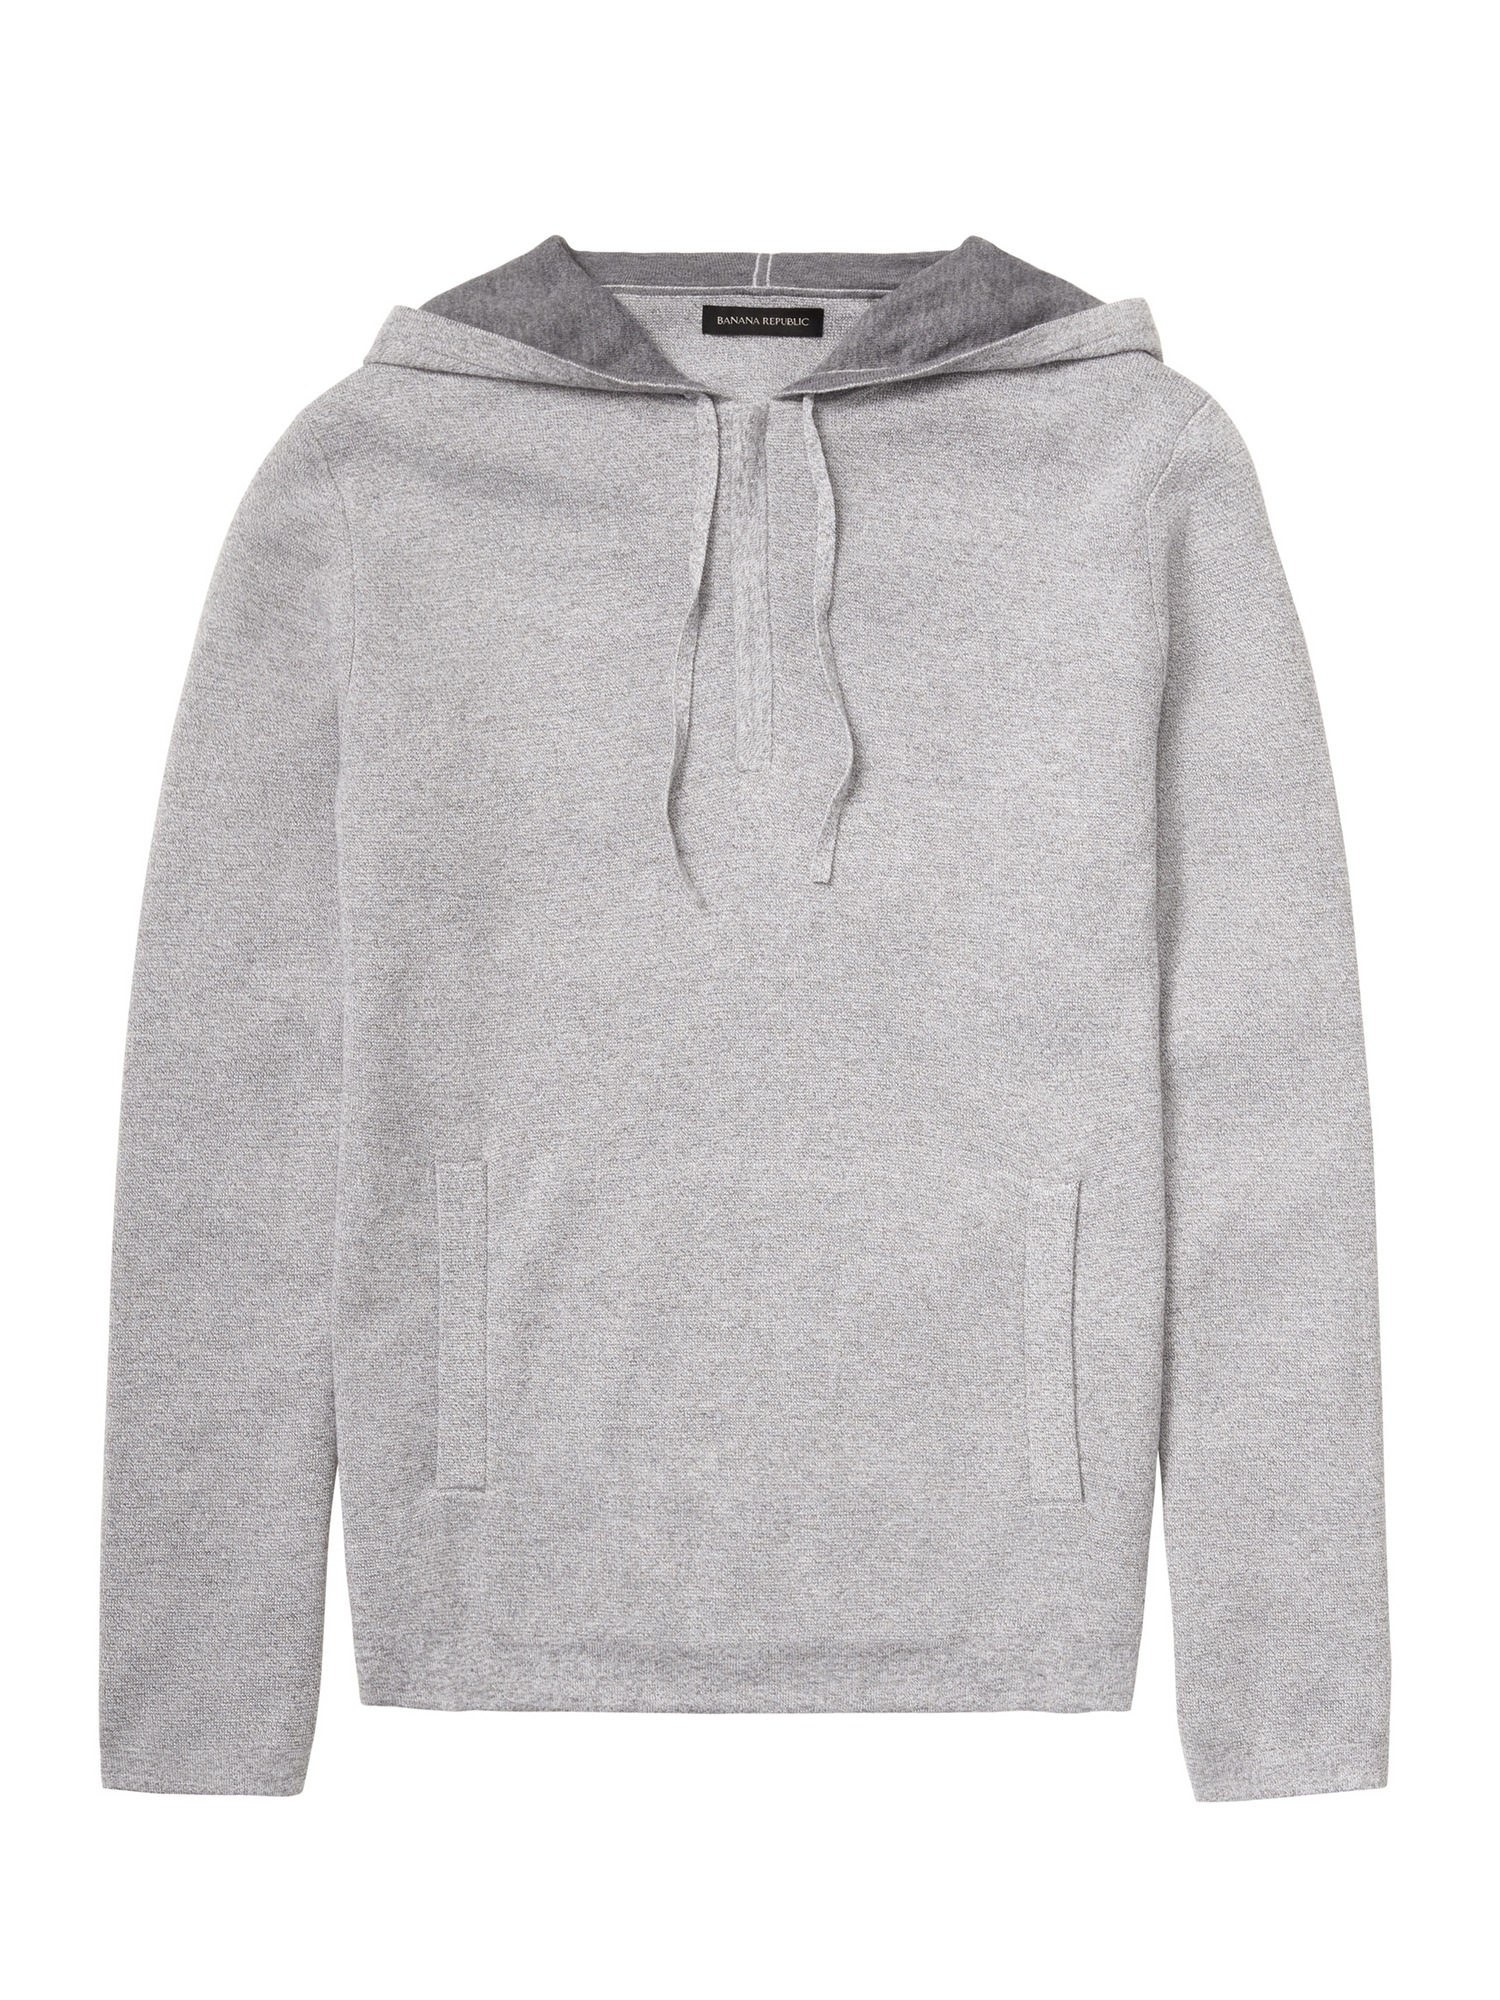 Textured Half-Zip Sweater Hoodie with COOLMAX® Technology